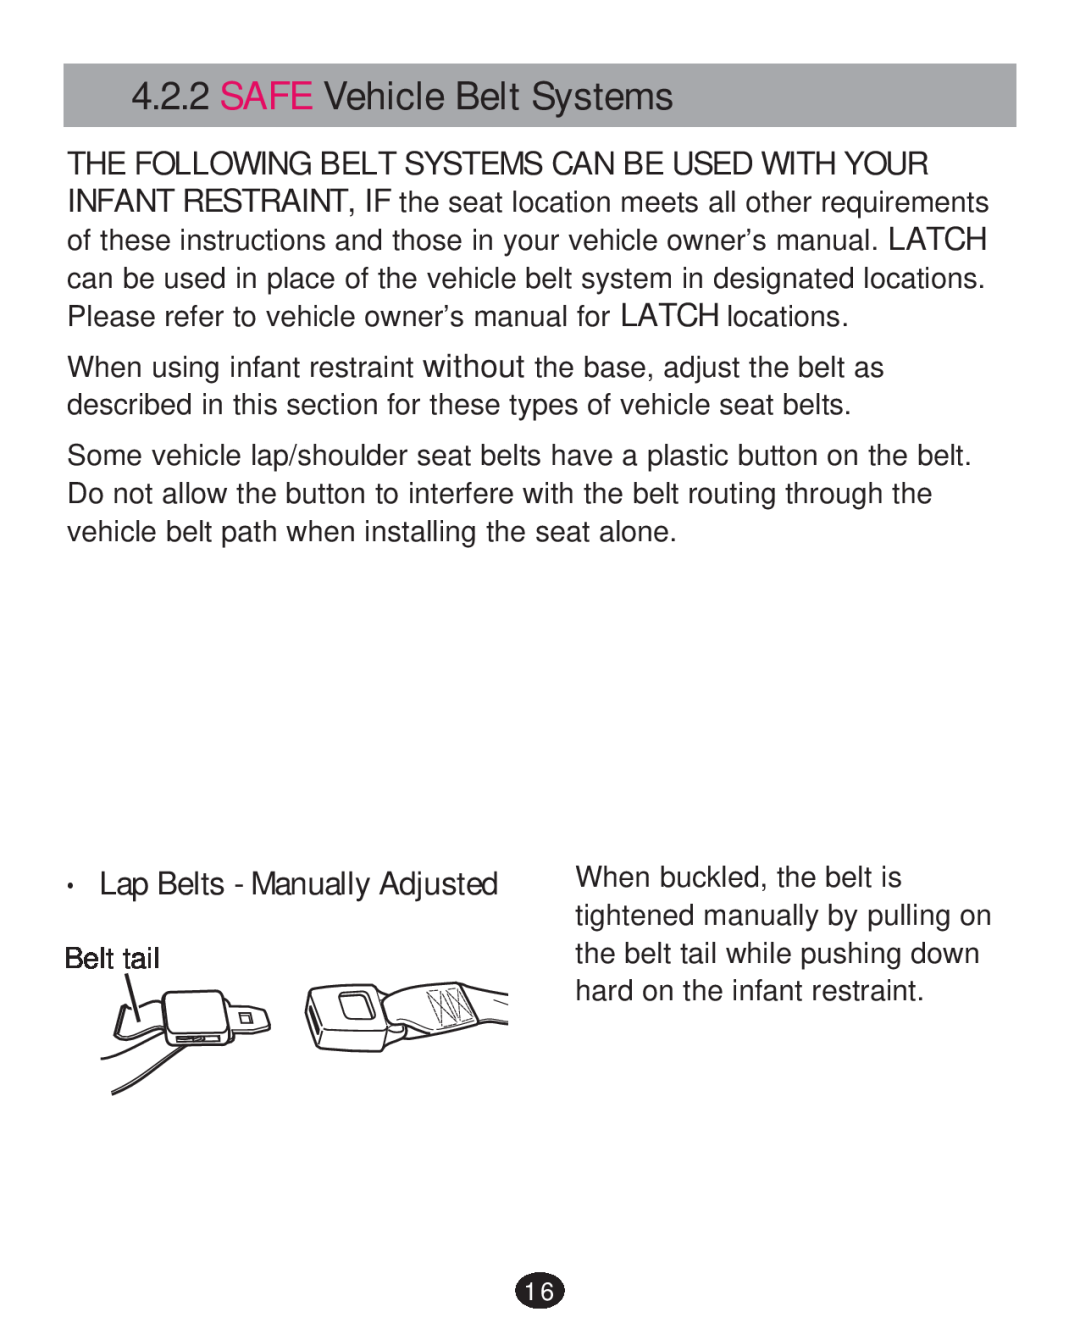 Graco 30 manual SAFE Vehicle Belt Systems, ‡ Lap Belts - Manually Adjusted 